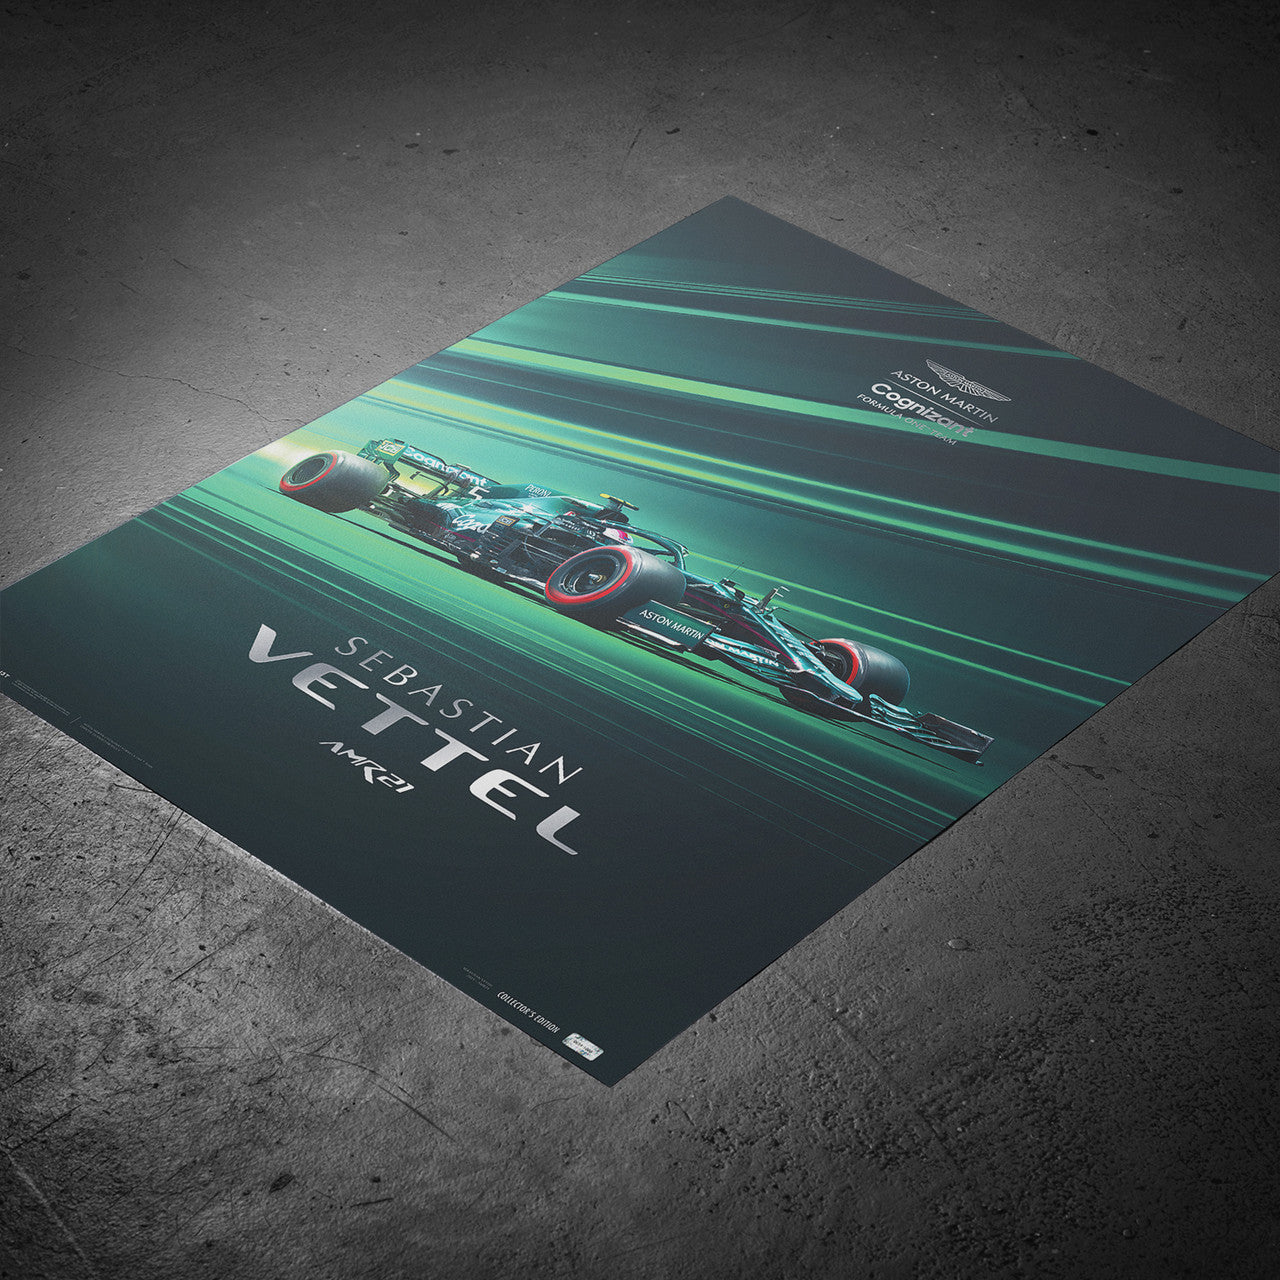 Aston Martin Cognizant Formula One™ Team - Sebastian Vettel - 2021 | Collector’s Edition